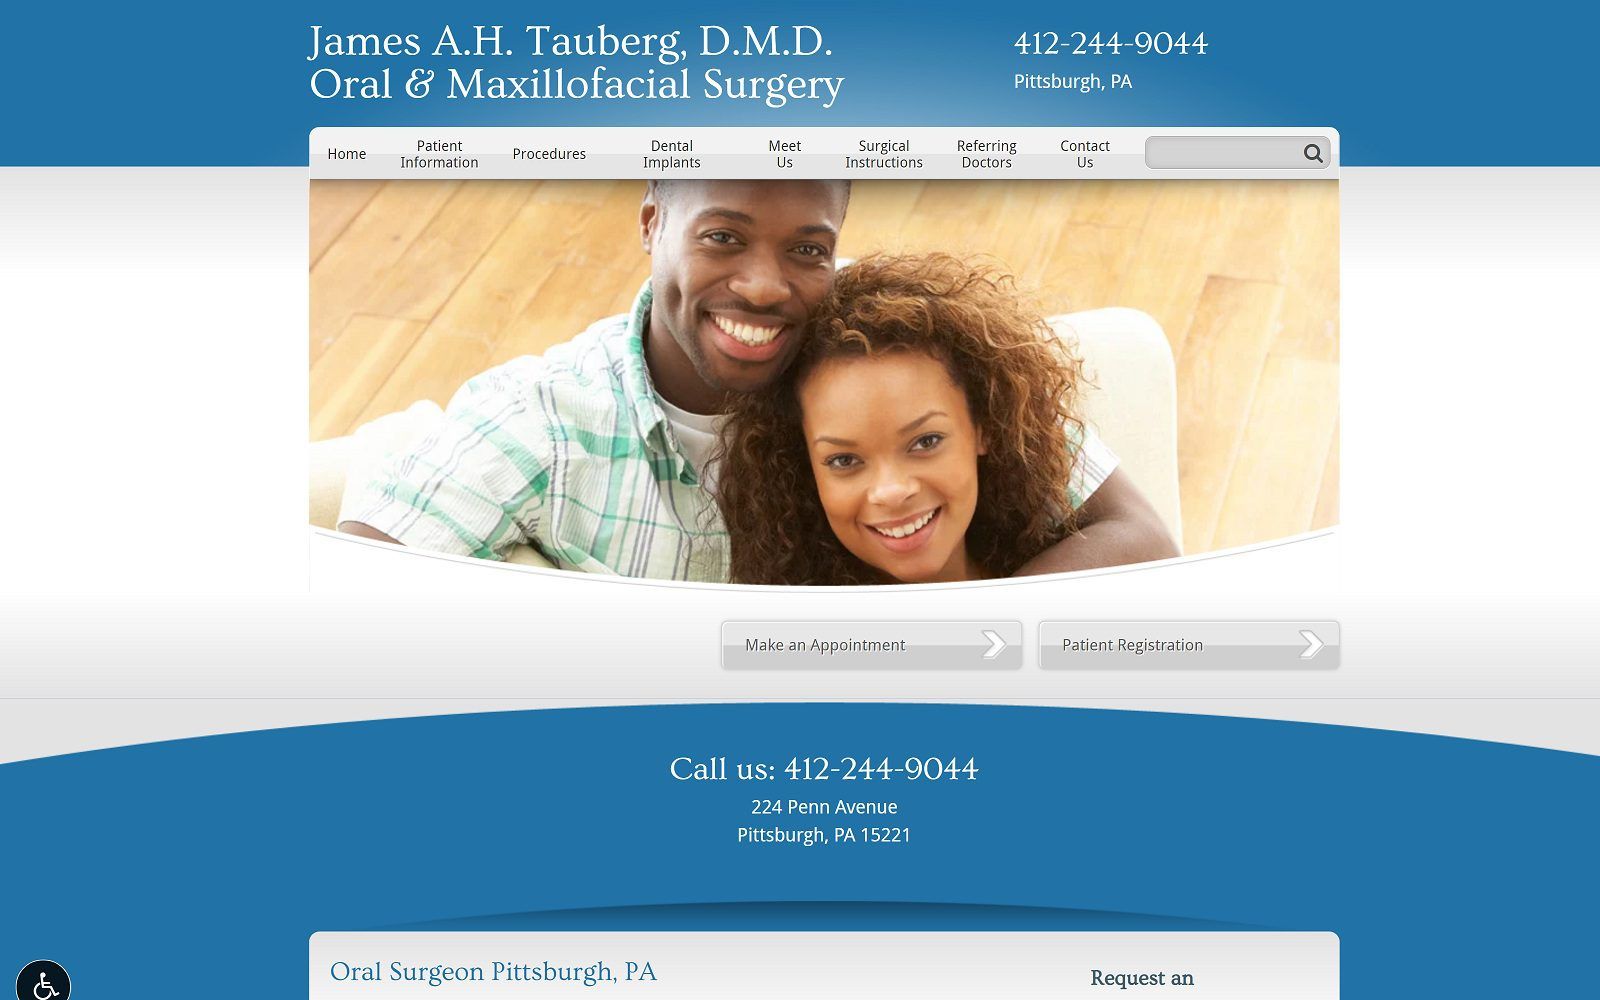 The screenshot of james a. H. Tauberg dmd oral & maxillofacial surgery website